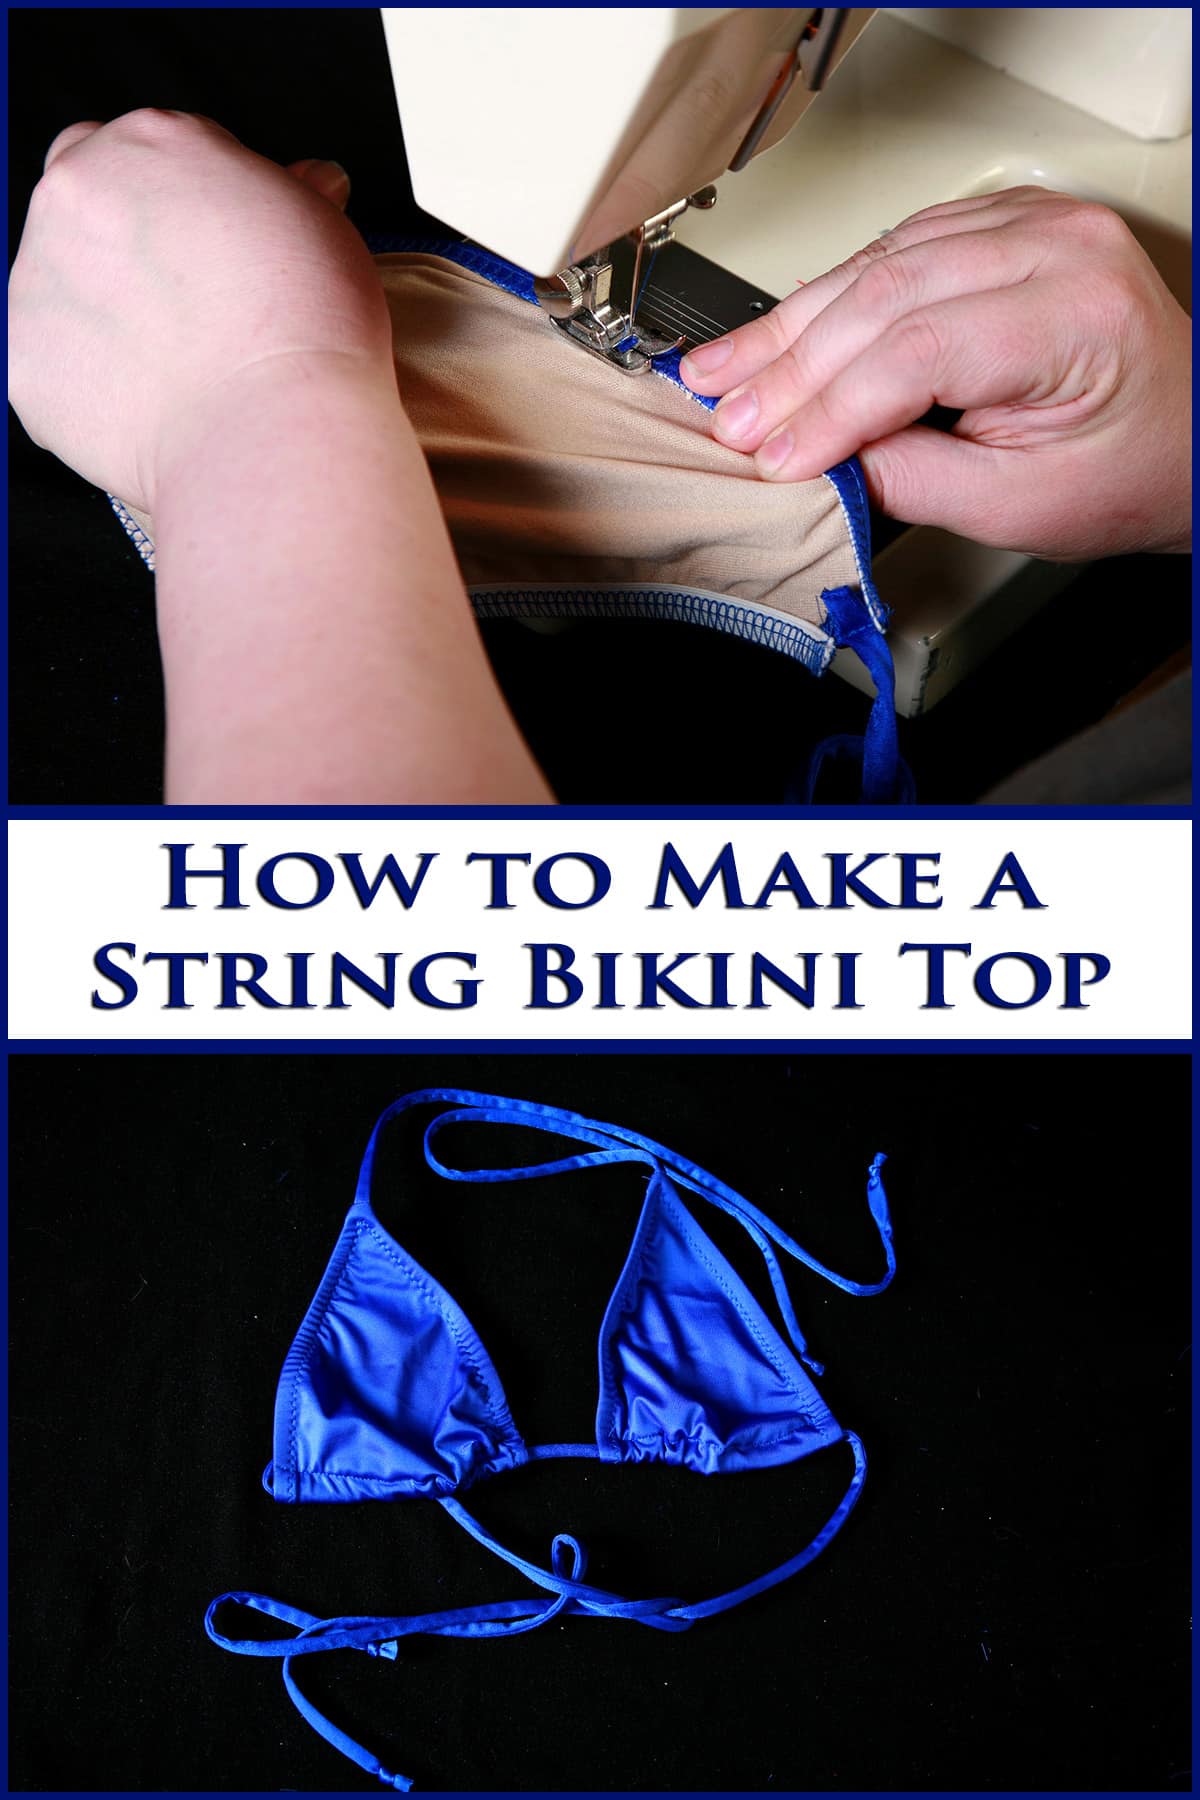 a bikini top being sewn in a machine, and a blue bikini top on a black background. Blue text says how to make a string bikini top.